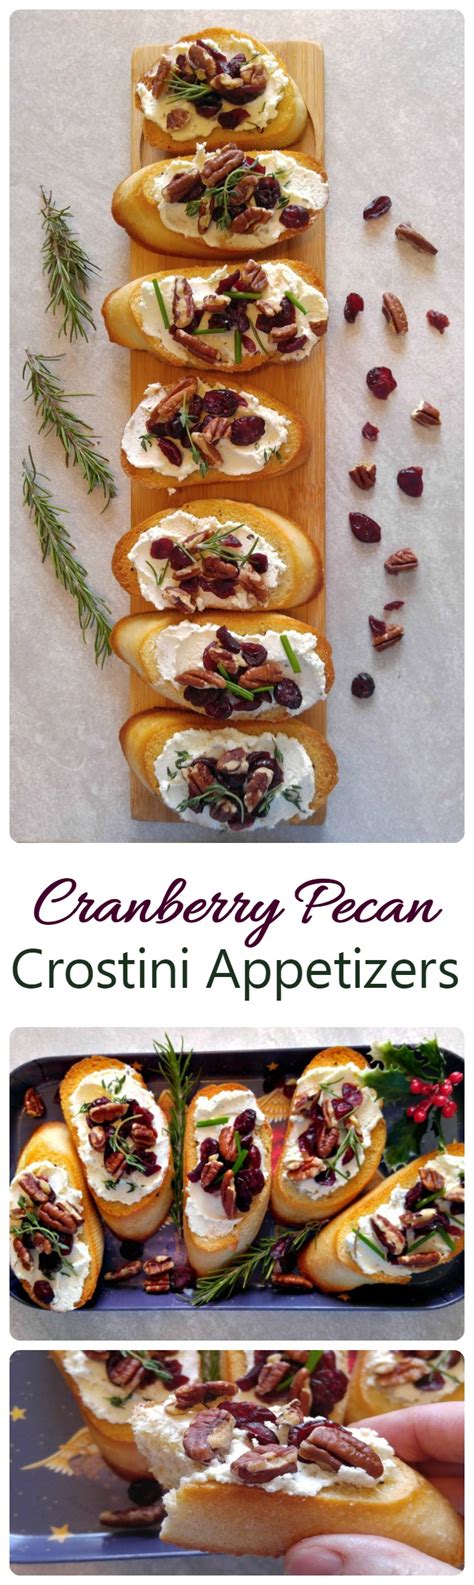 Cranberry Pecan Crostini Appetizers